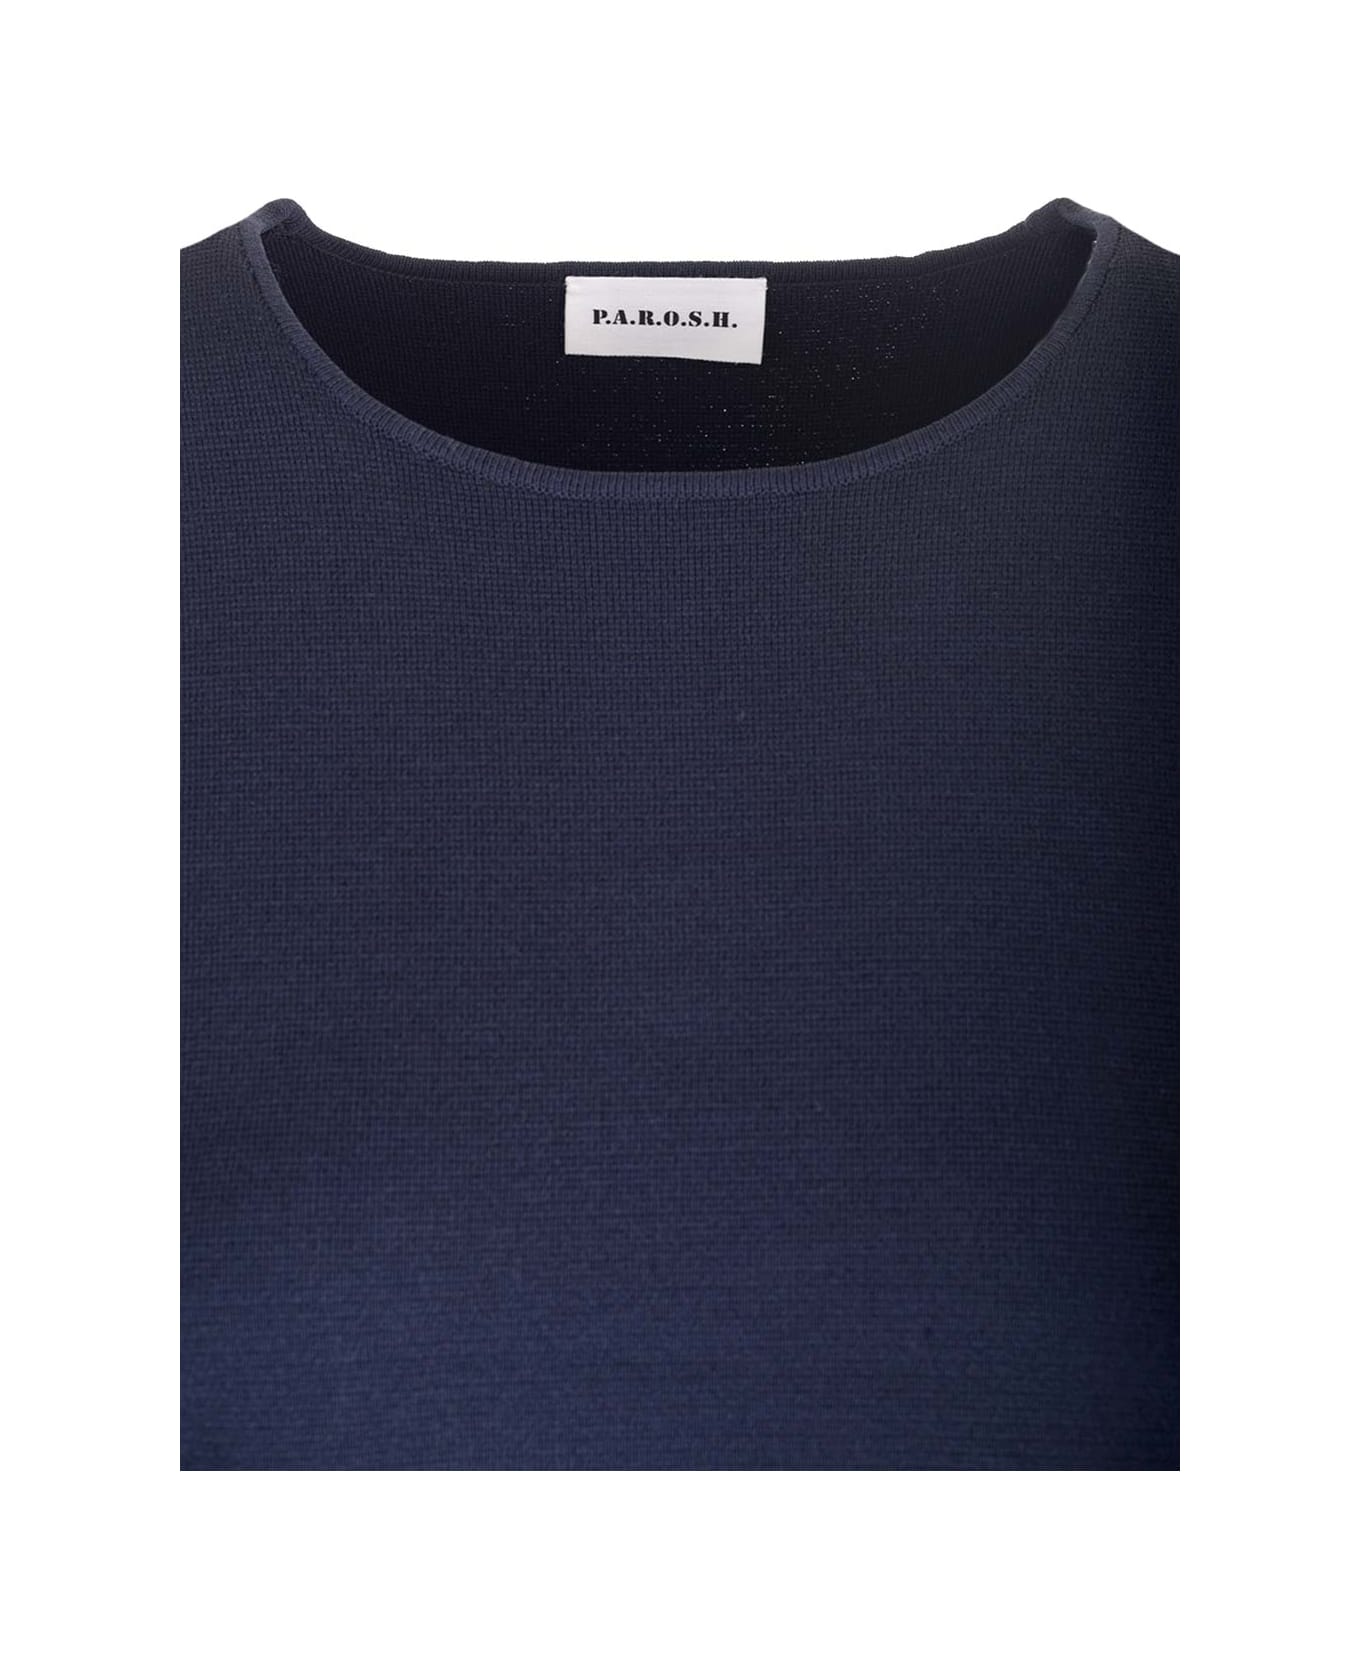 Parosh Blue T-shirt - Blu Tシャツ